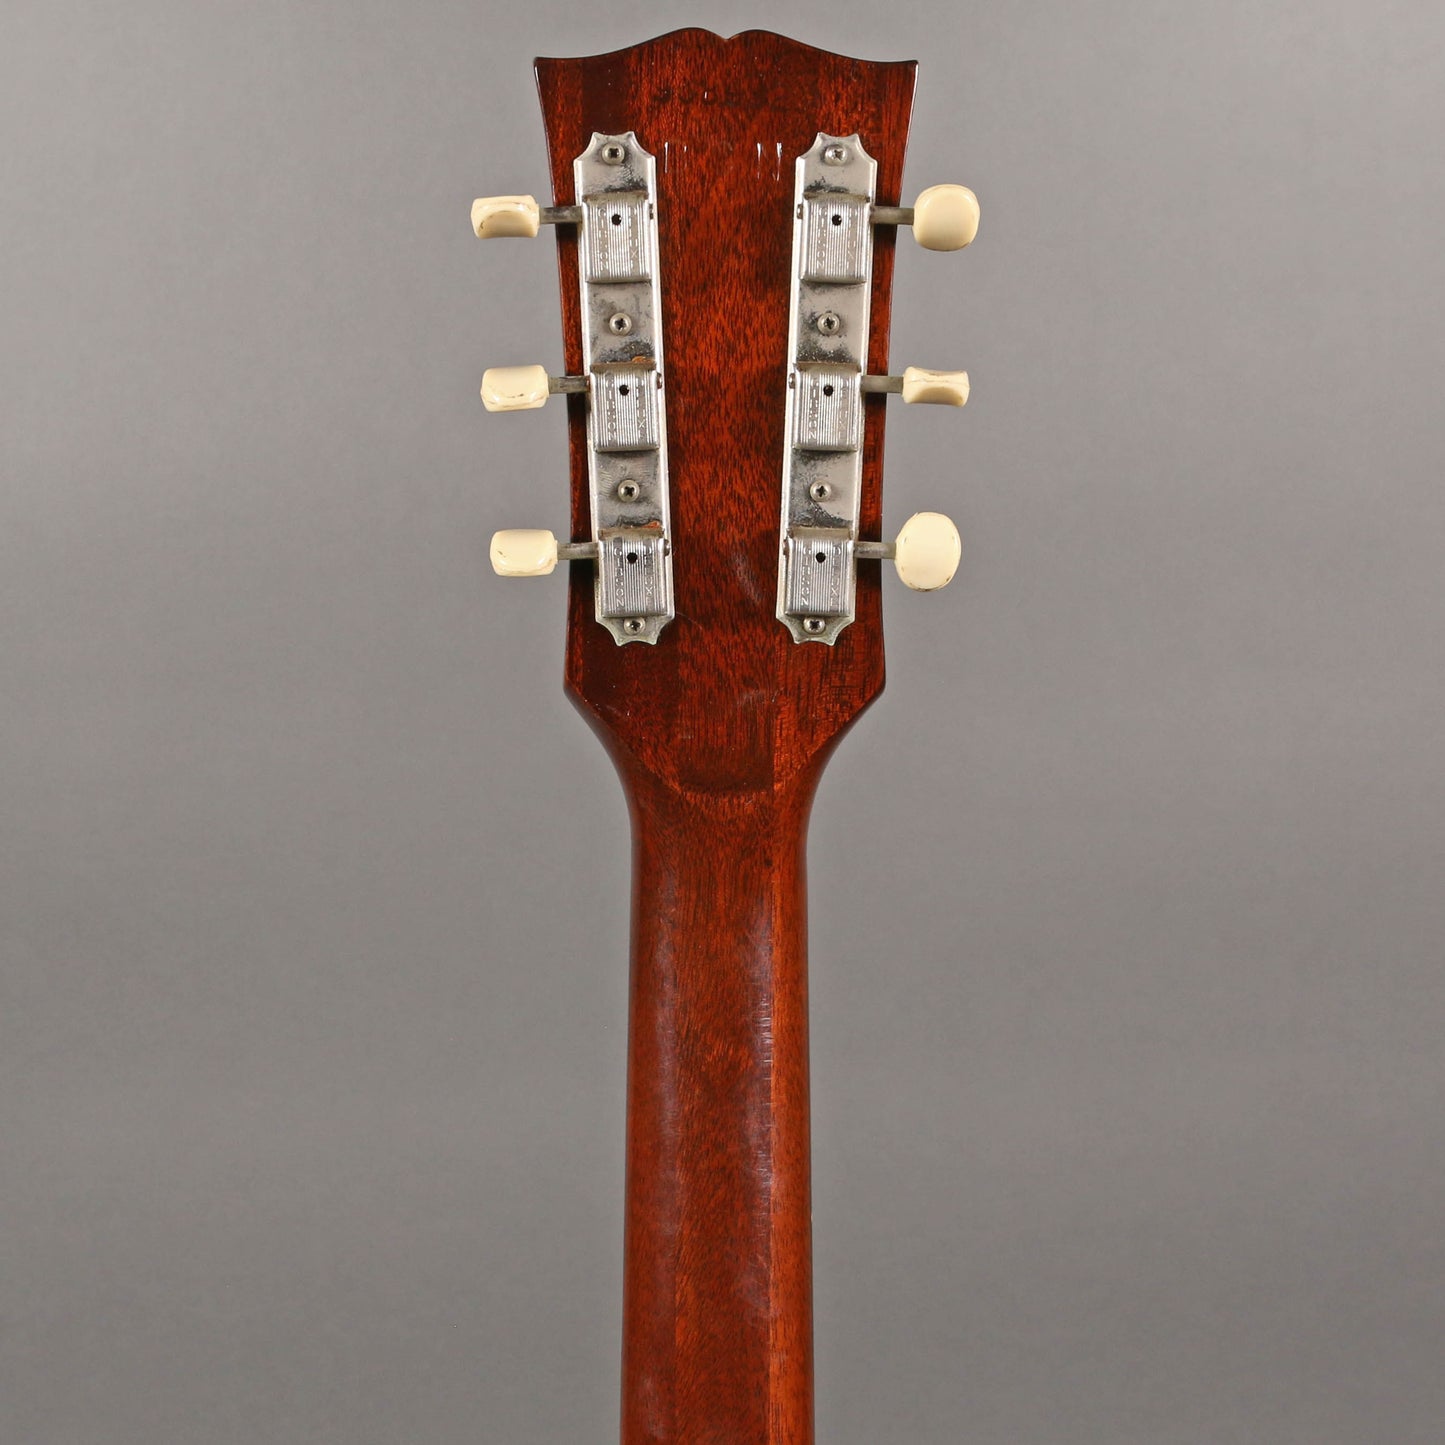 1970s Gibson B-Series Prototype [*Kalamazoo Collection]